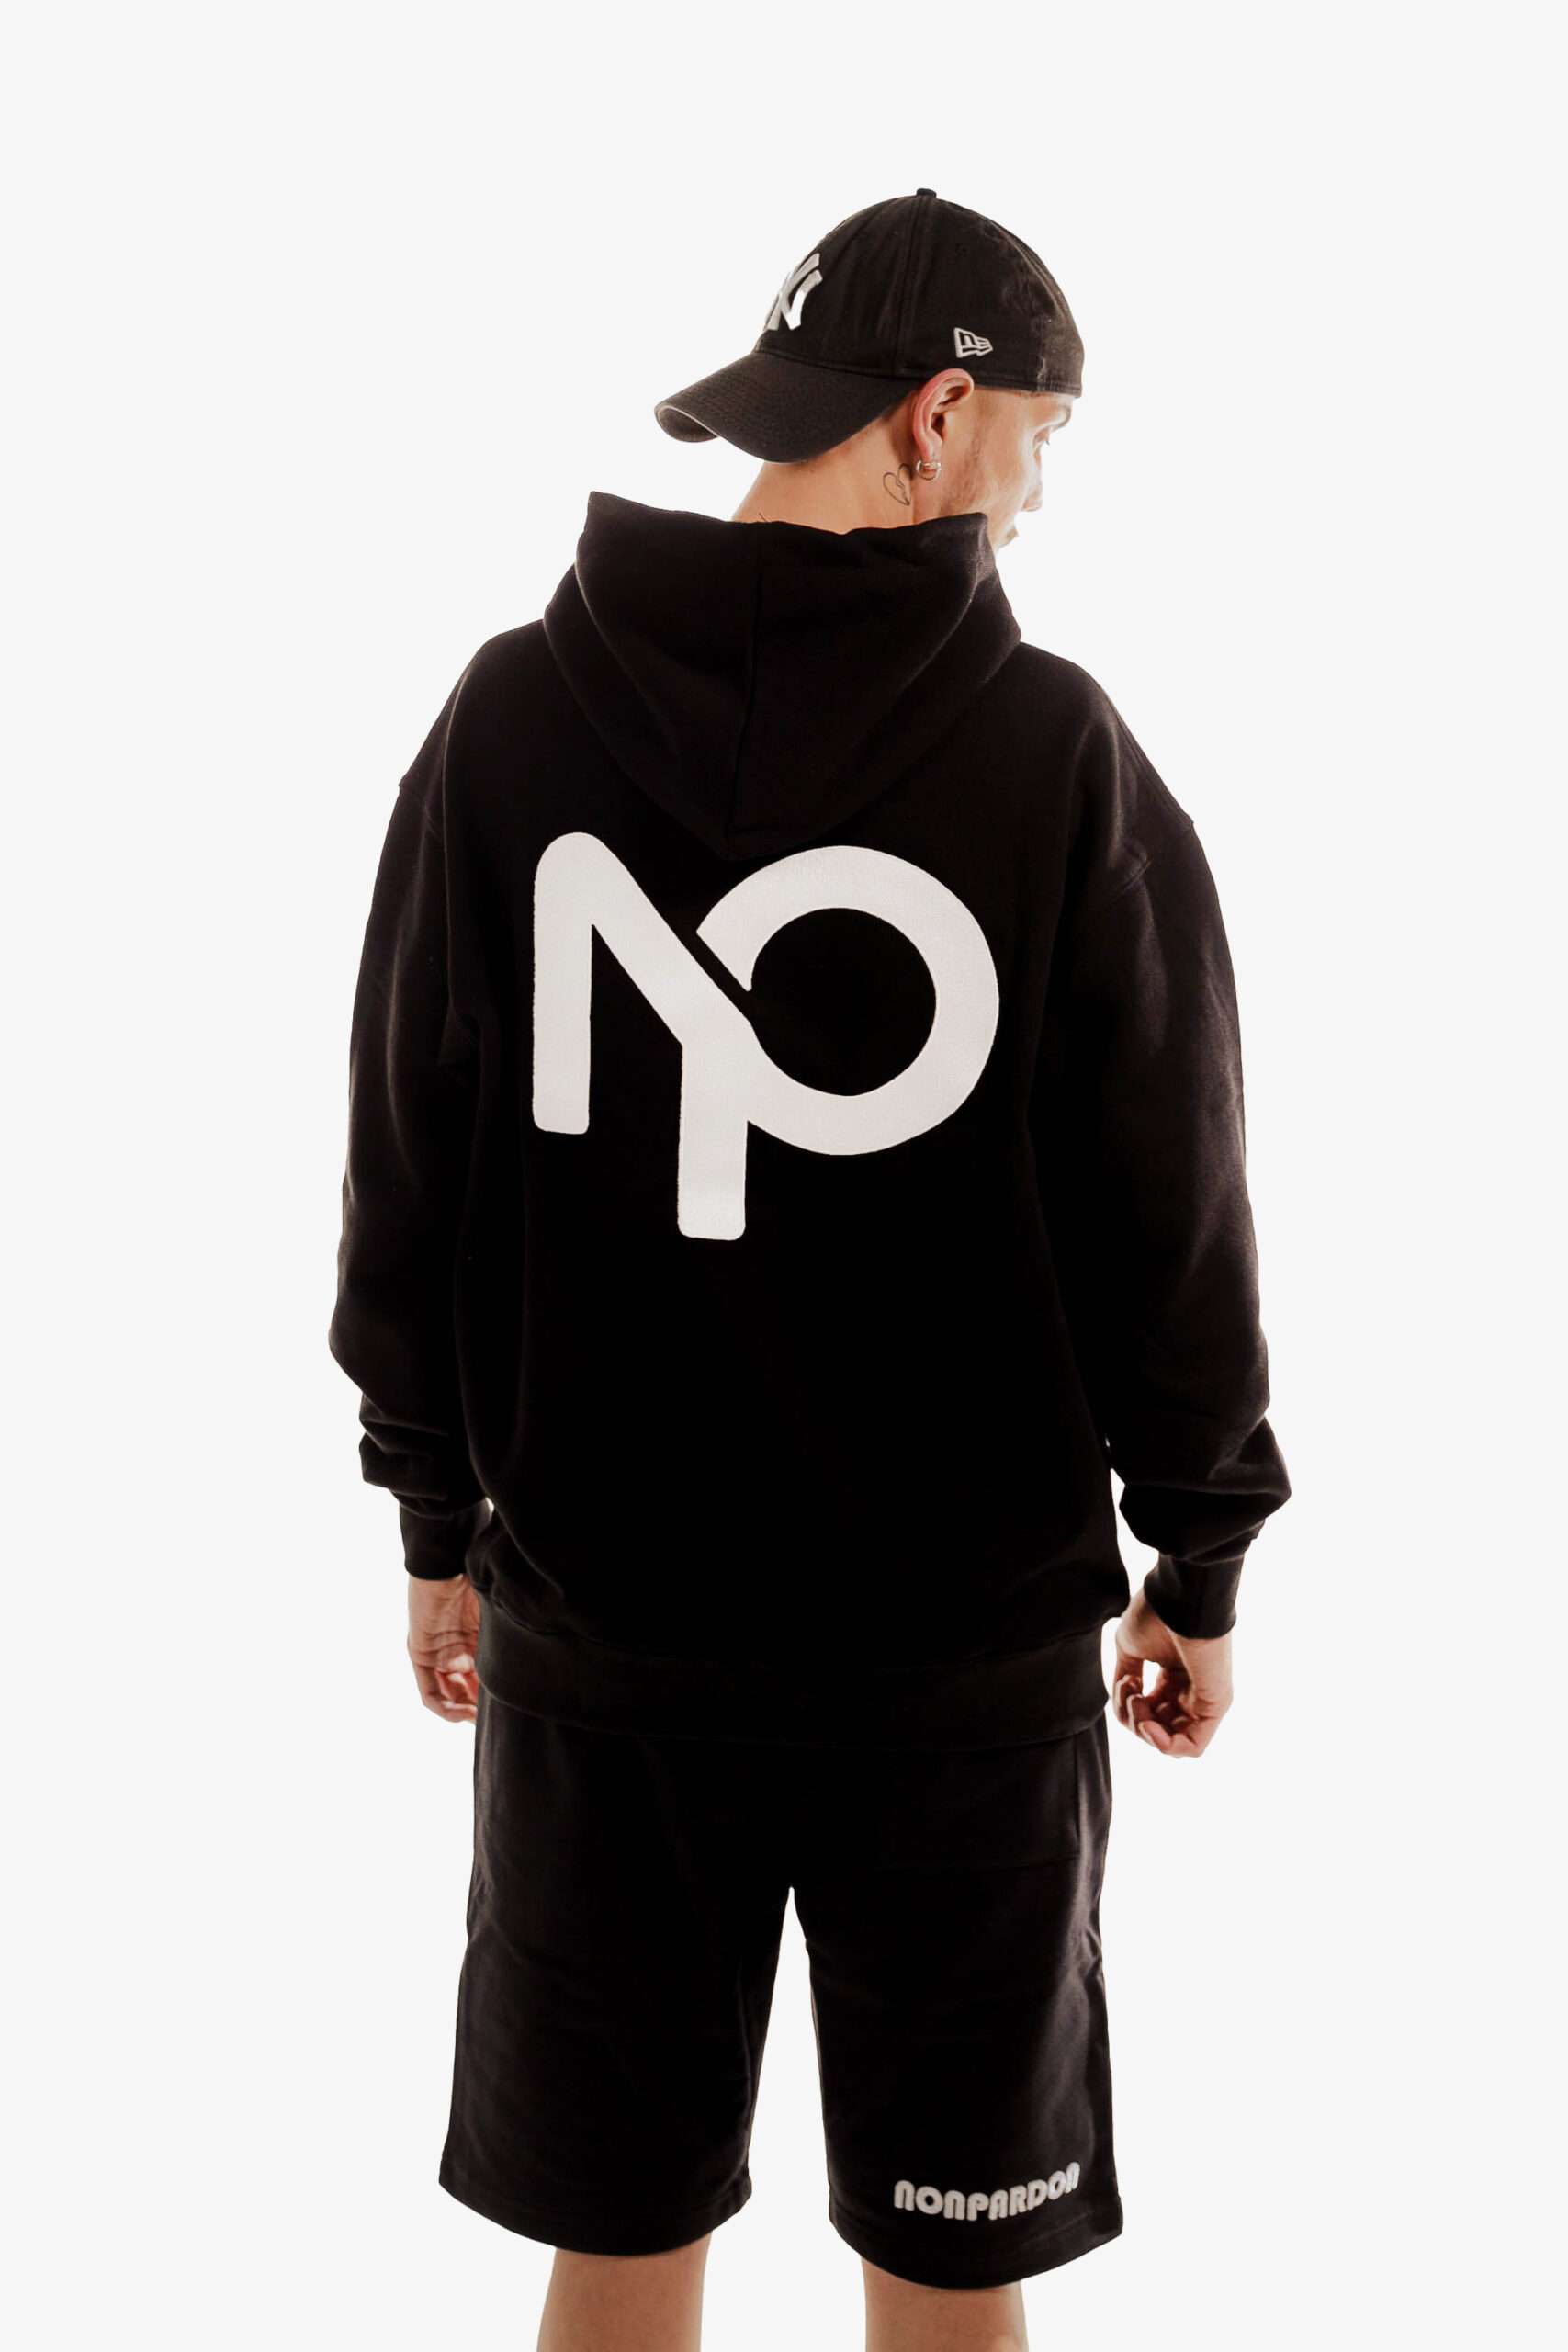 NonPardon Basic Logo Hoodie – UNISEX – Black